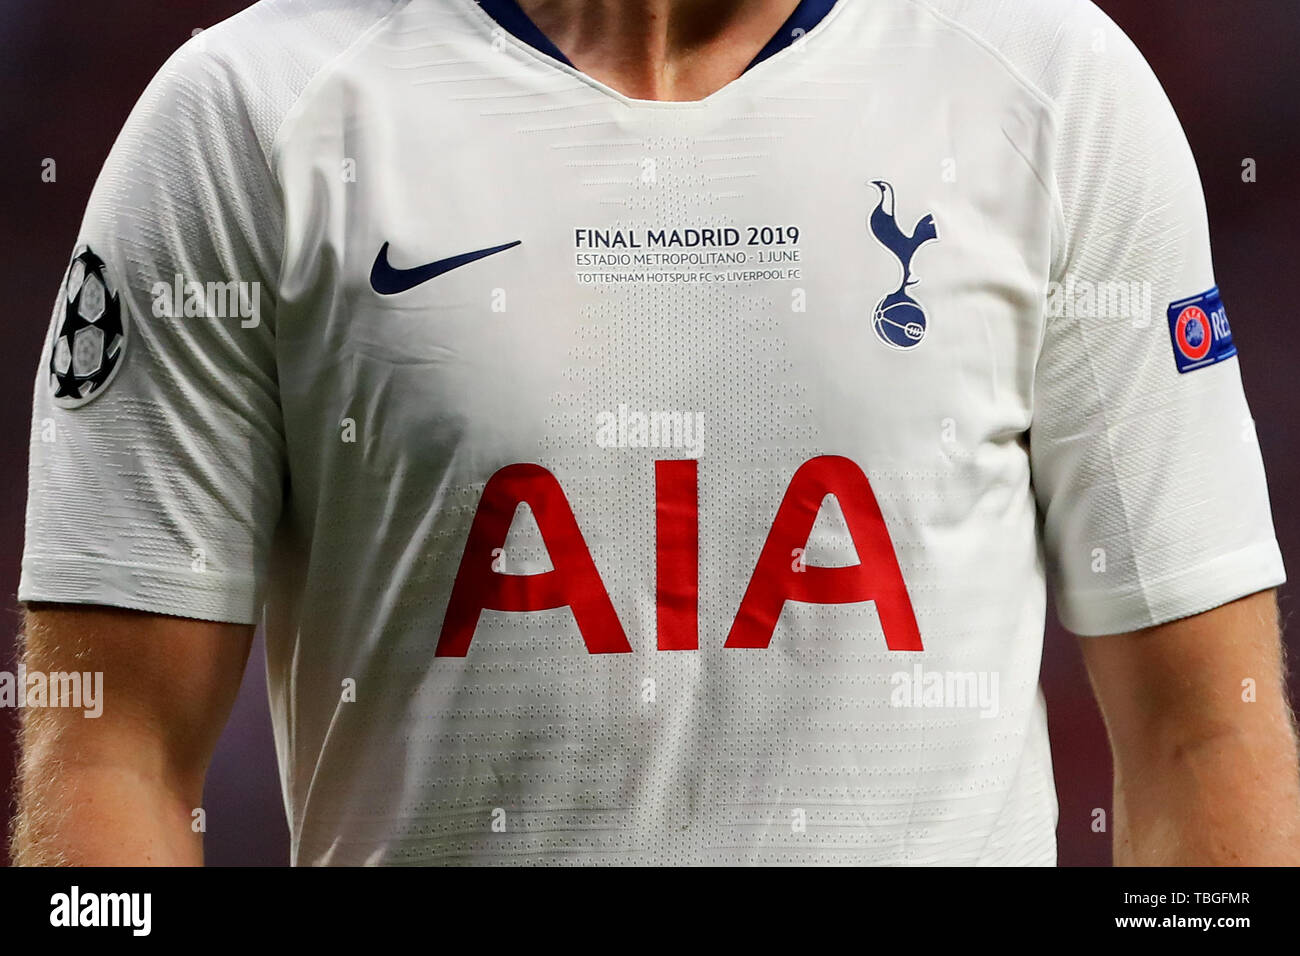 Tottenham Hotspur Kit History - Champions League Shirts